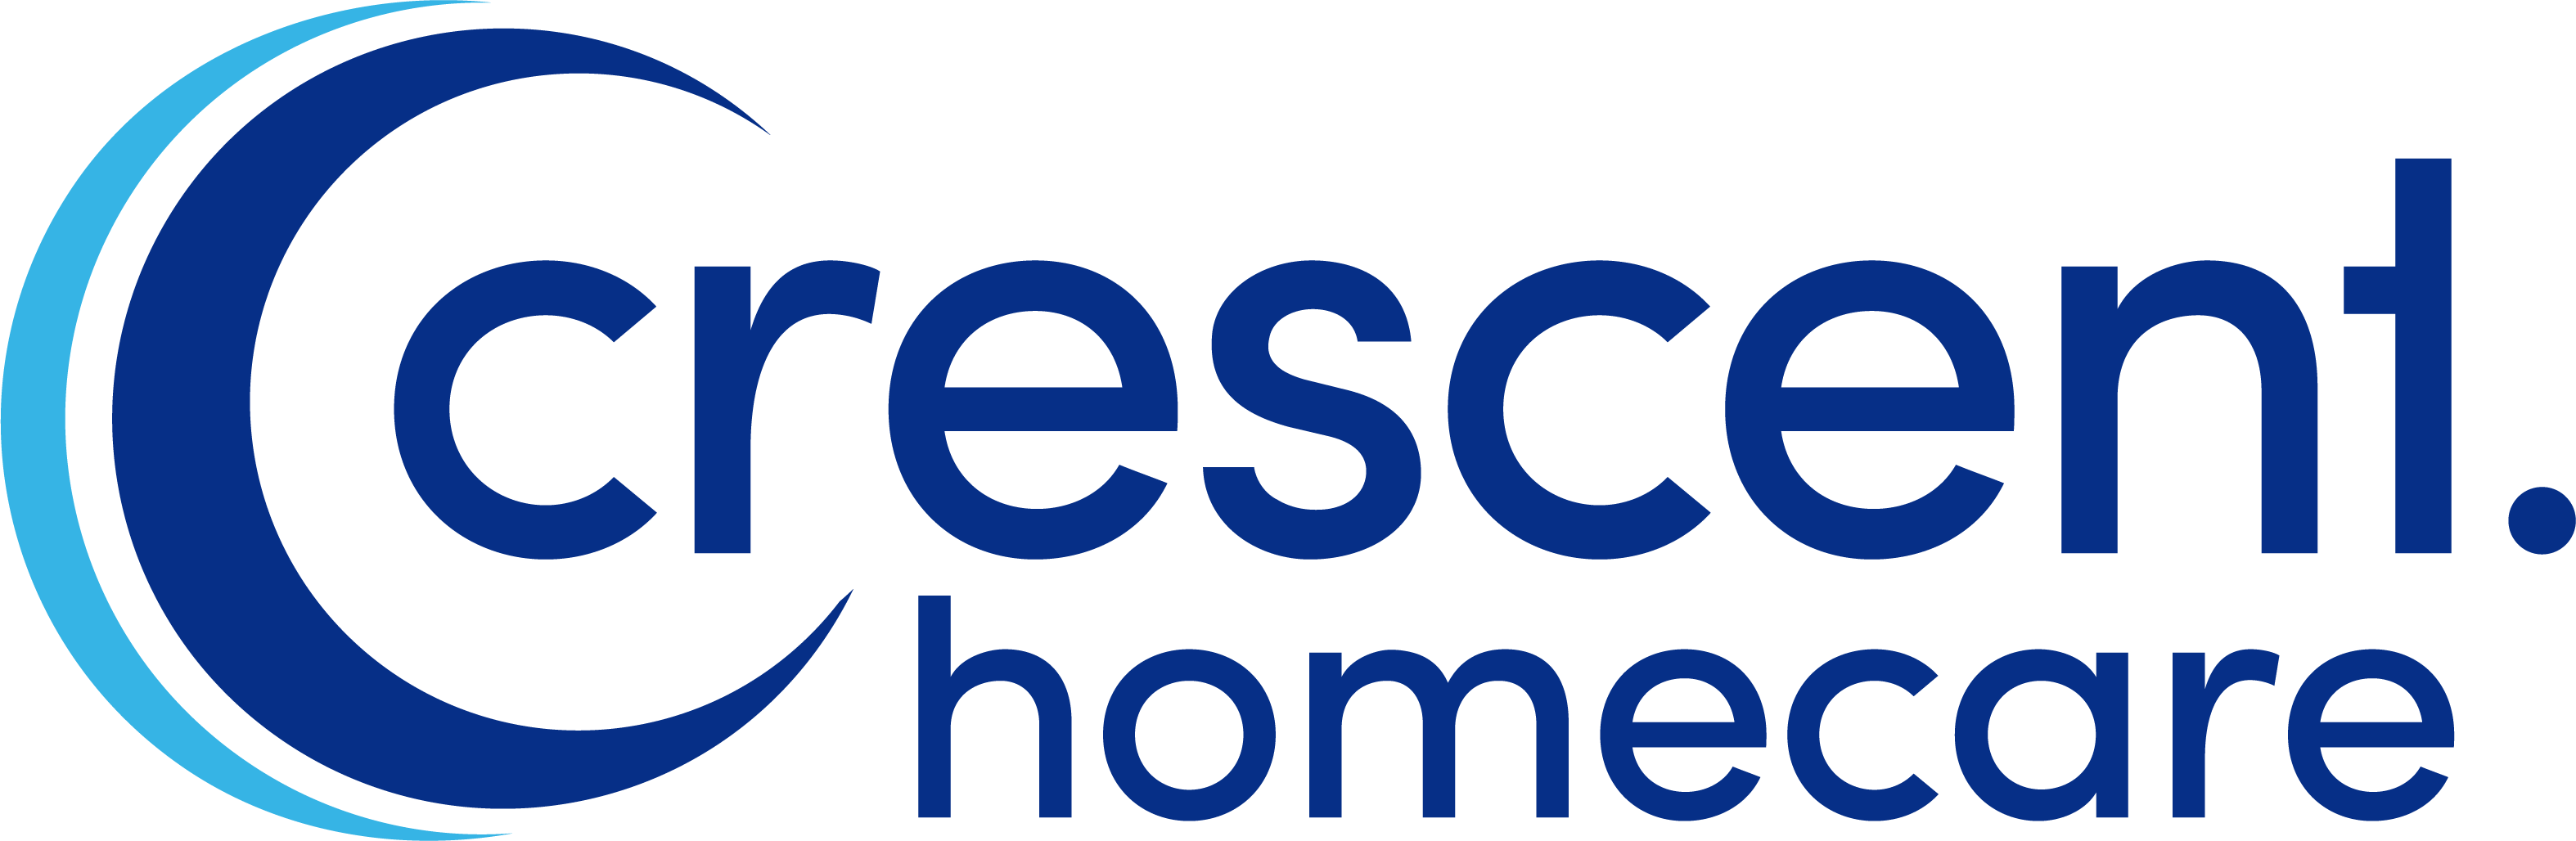 Crescent Homecare